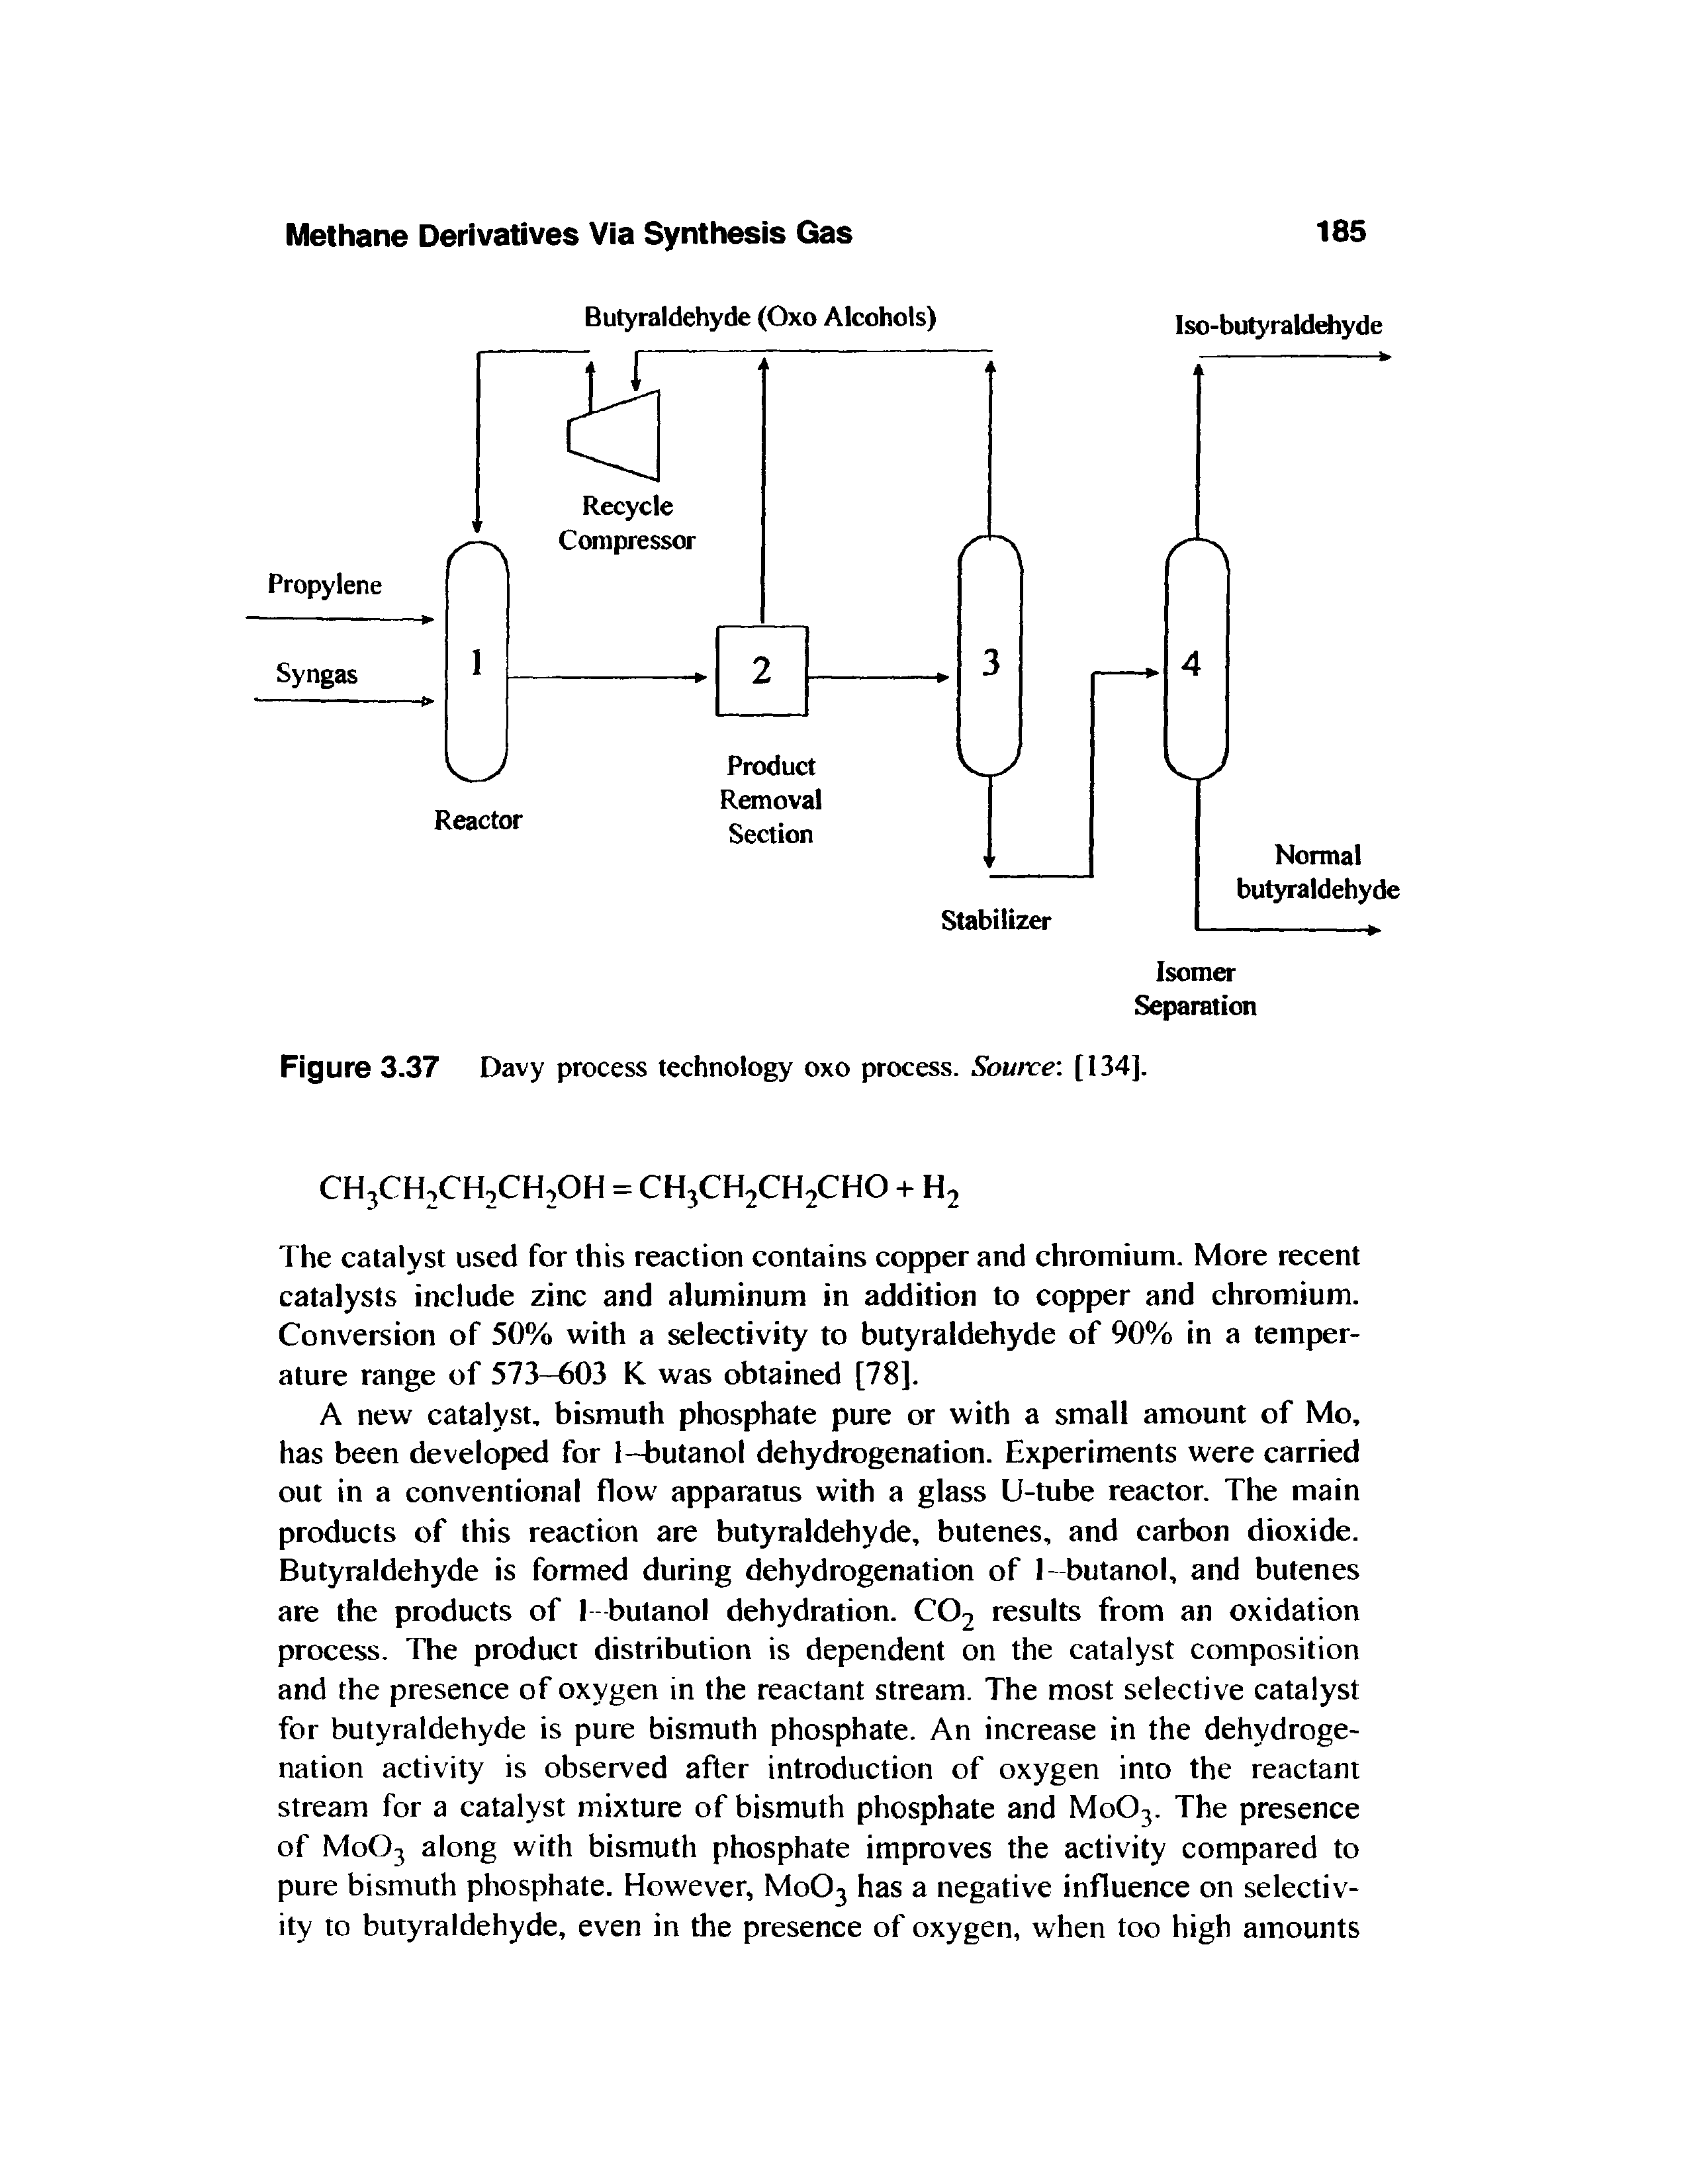 Figure 3.37 Davy process technology oxo process. Source [134].